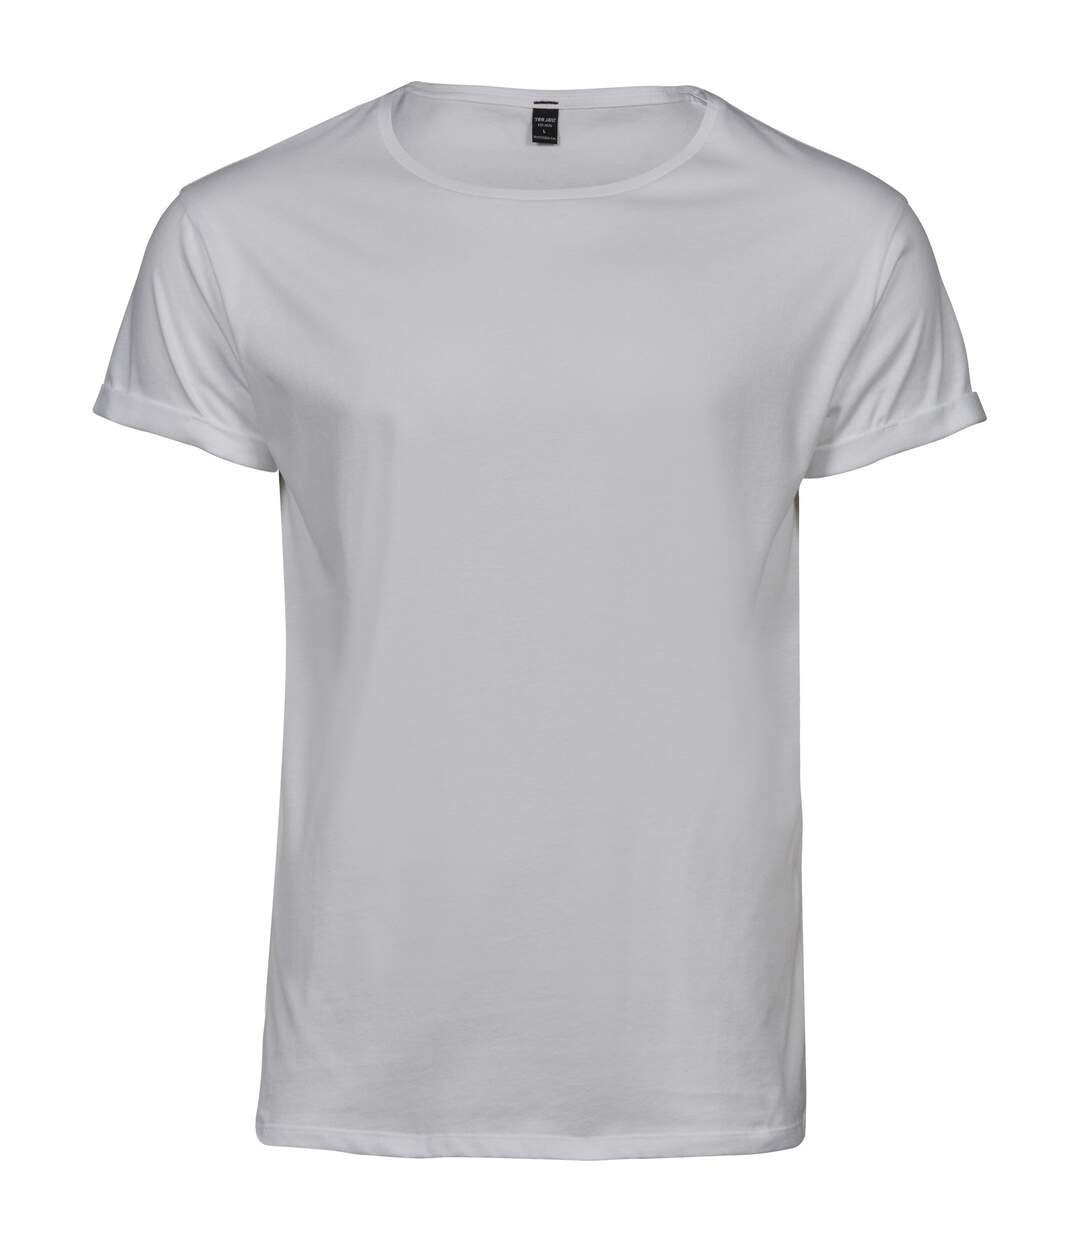 Tee Jays - T-shirt roulé - Homme (Blanc) - UTPC3437